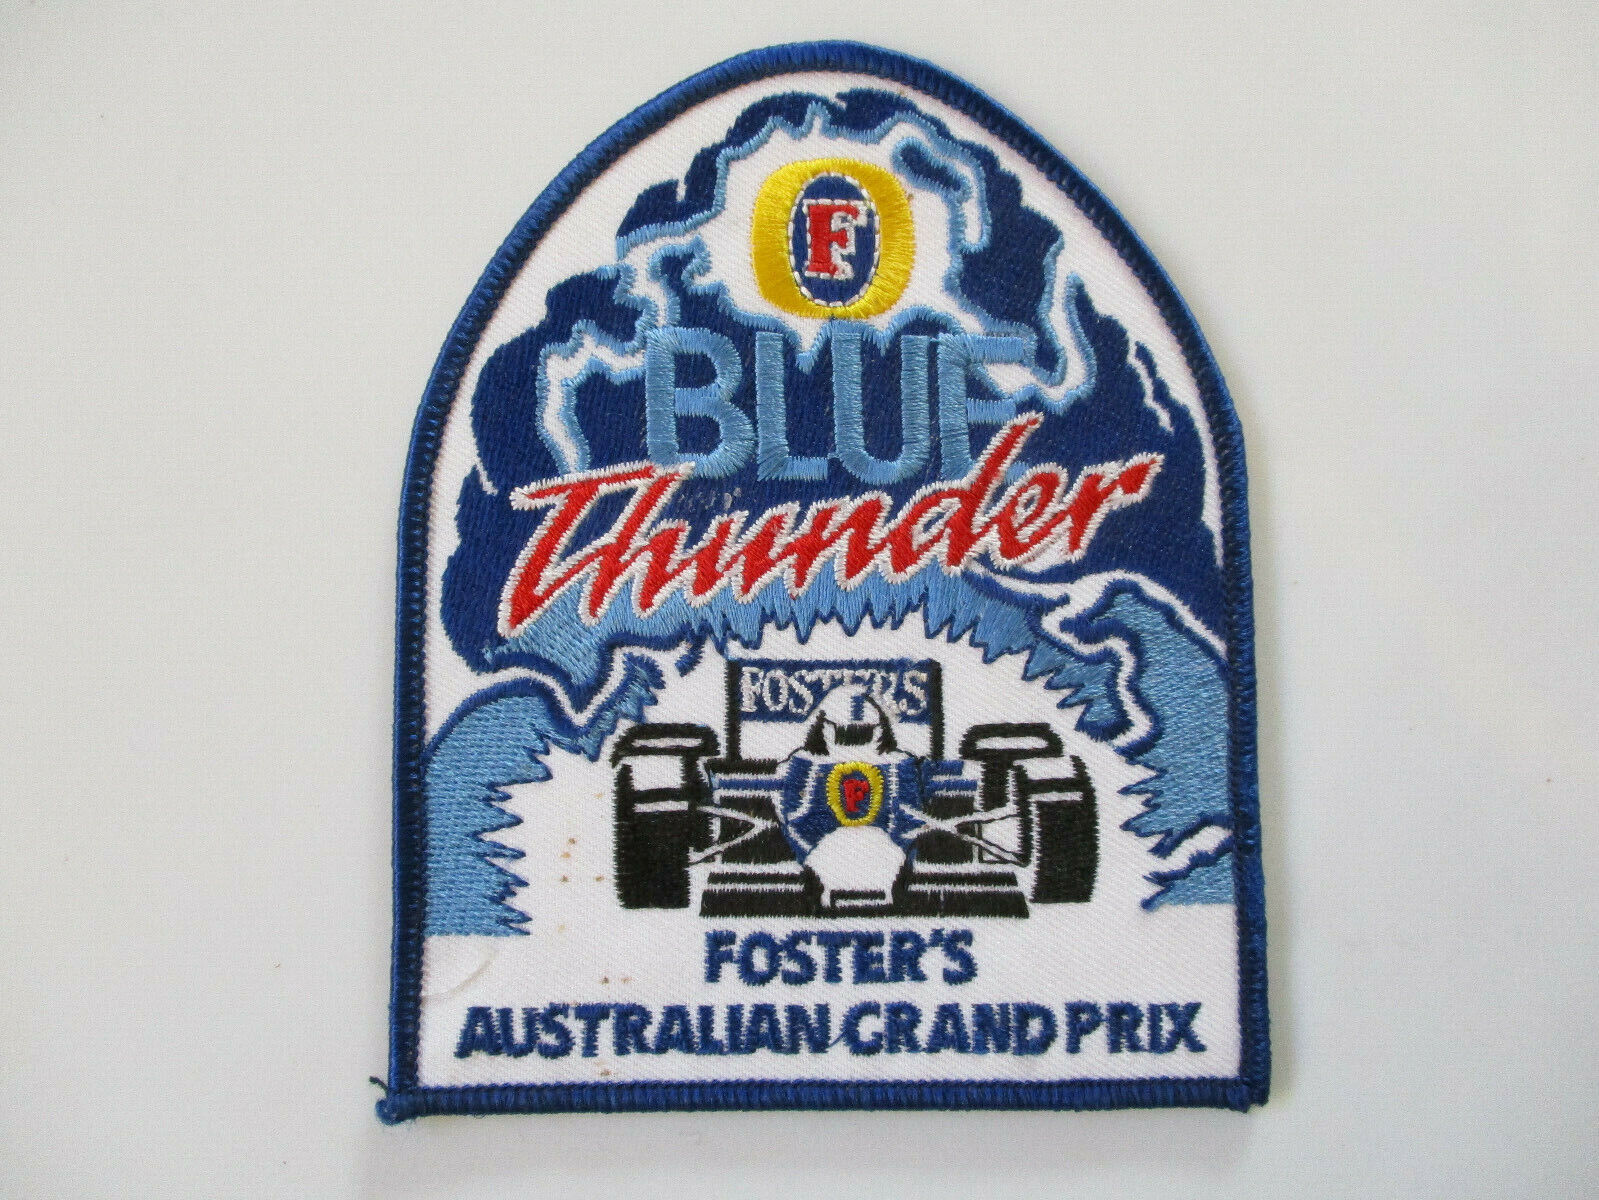 Foster\'s Blue Thunder Australian Grand Prix Australia Race Indy Car Racing Patch